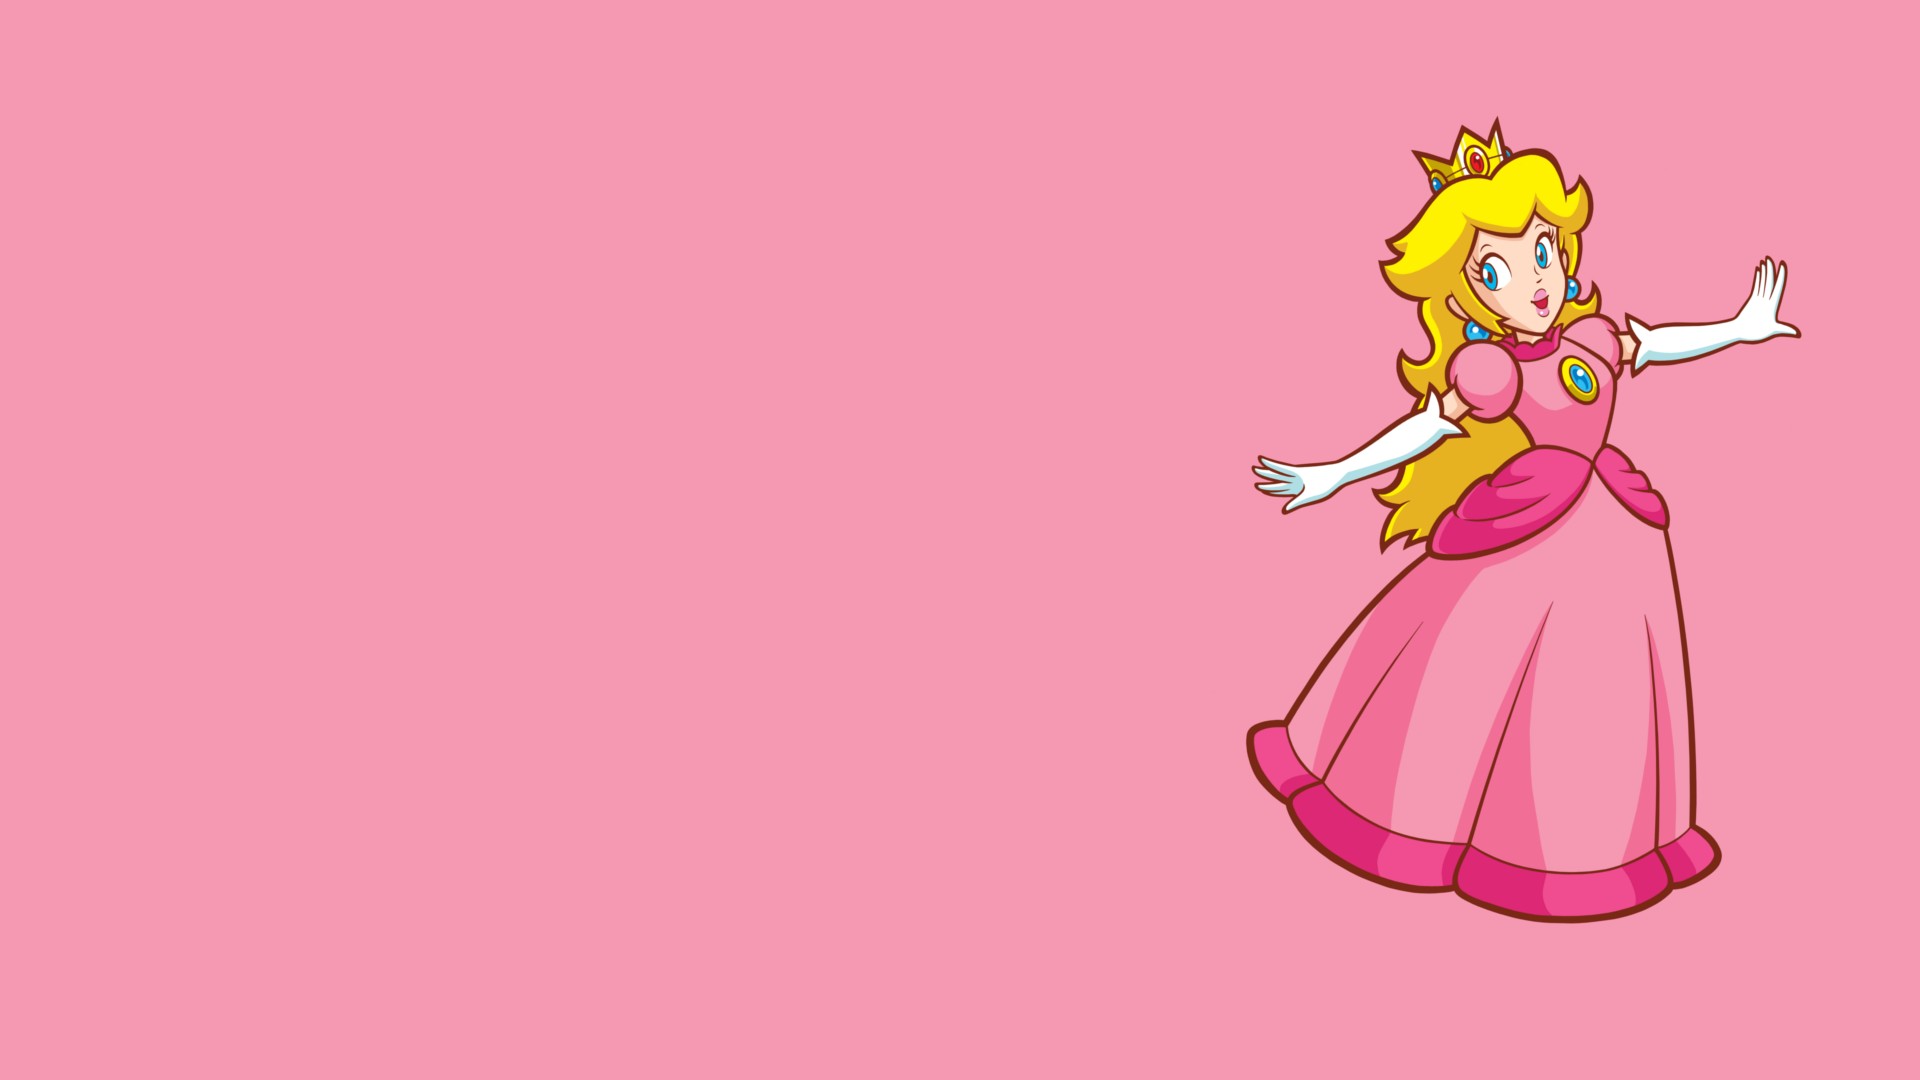 fond d'écran princesse peach,rose,dessin animé,personnage fictif,illustration,dessin animé